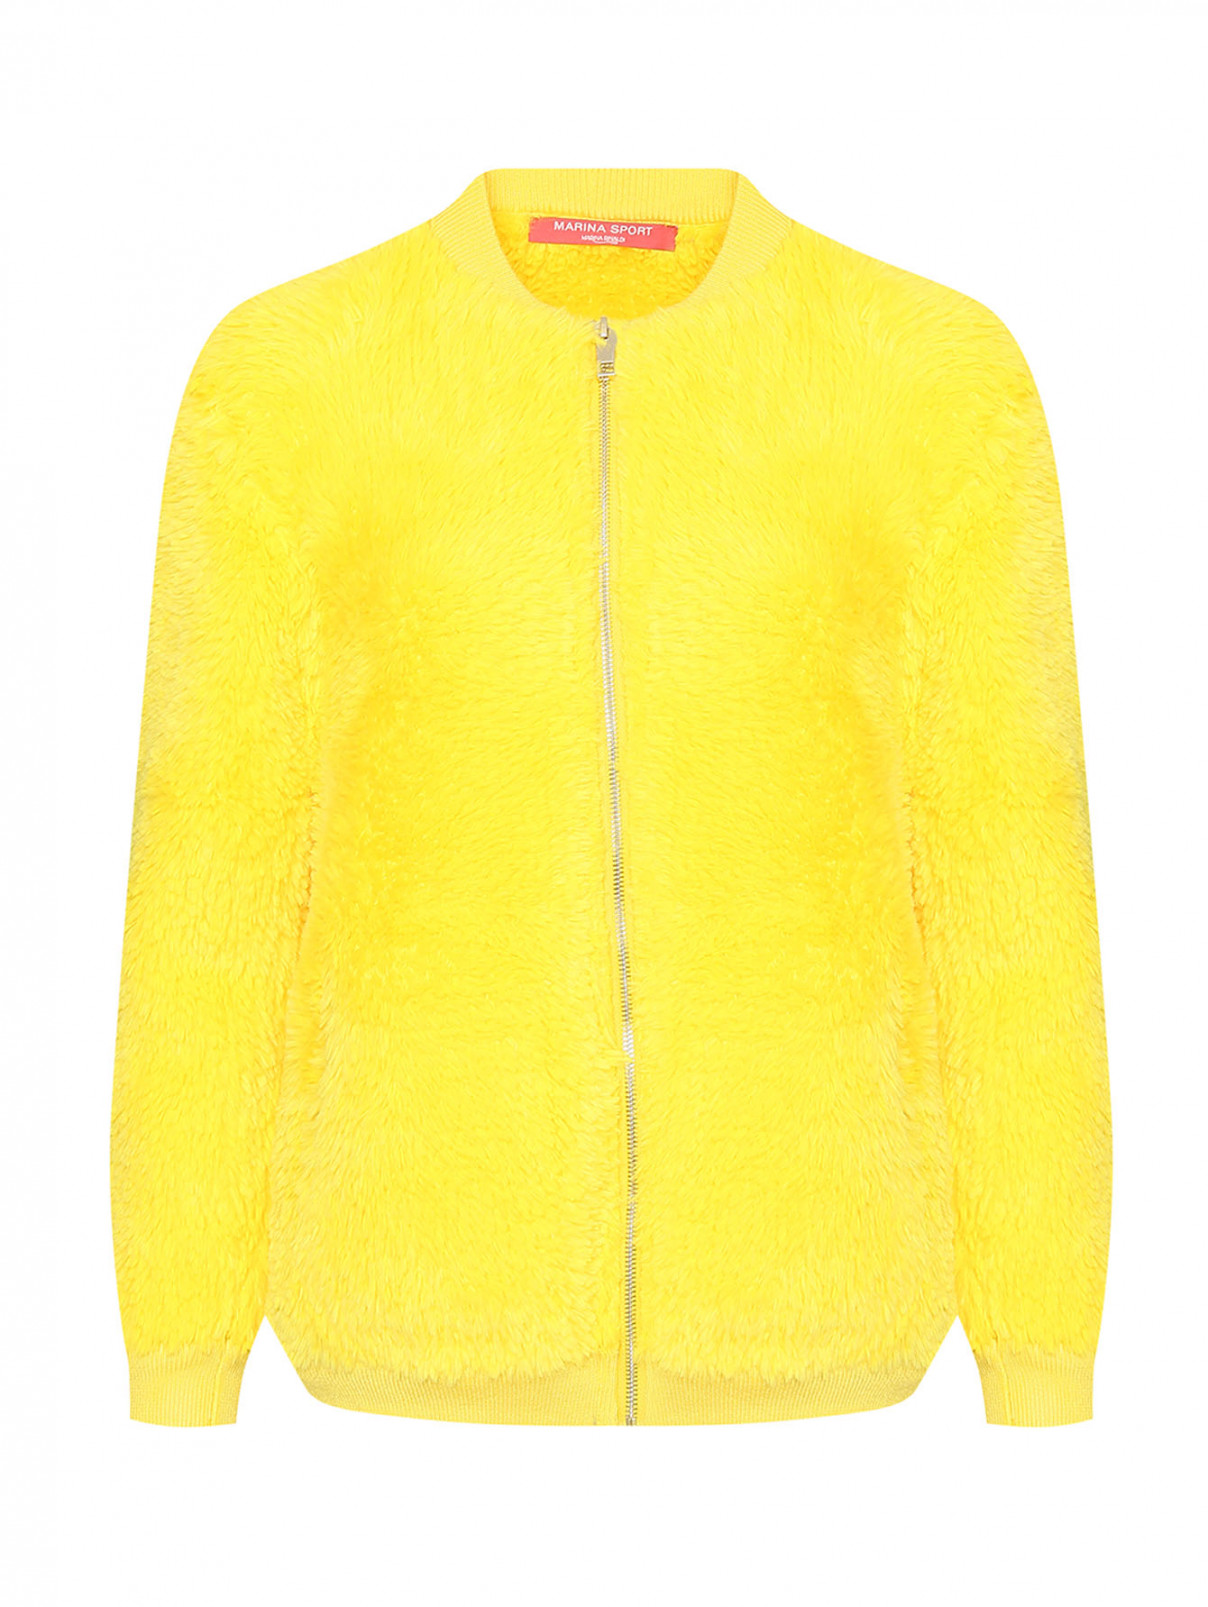 Бомбер на молнии с карманами Marina Rinaldi  –  Общий вид  – Цвет:  Желтый